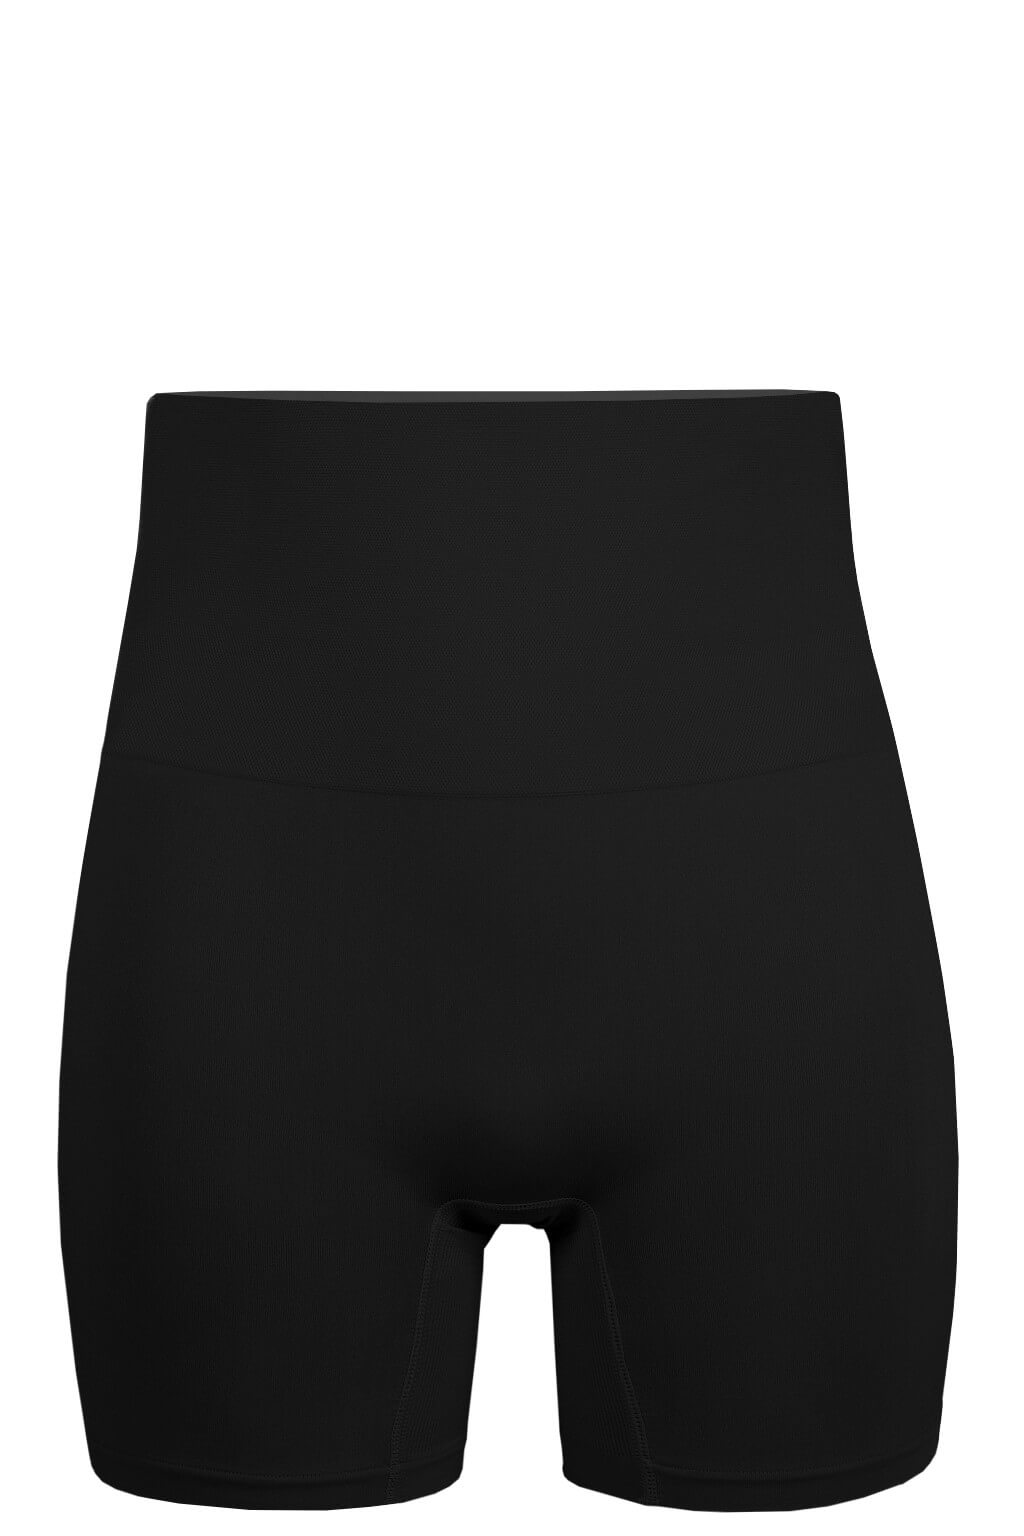 Riga stahovací prádlo vysoký střih YW6002 XL černá